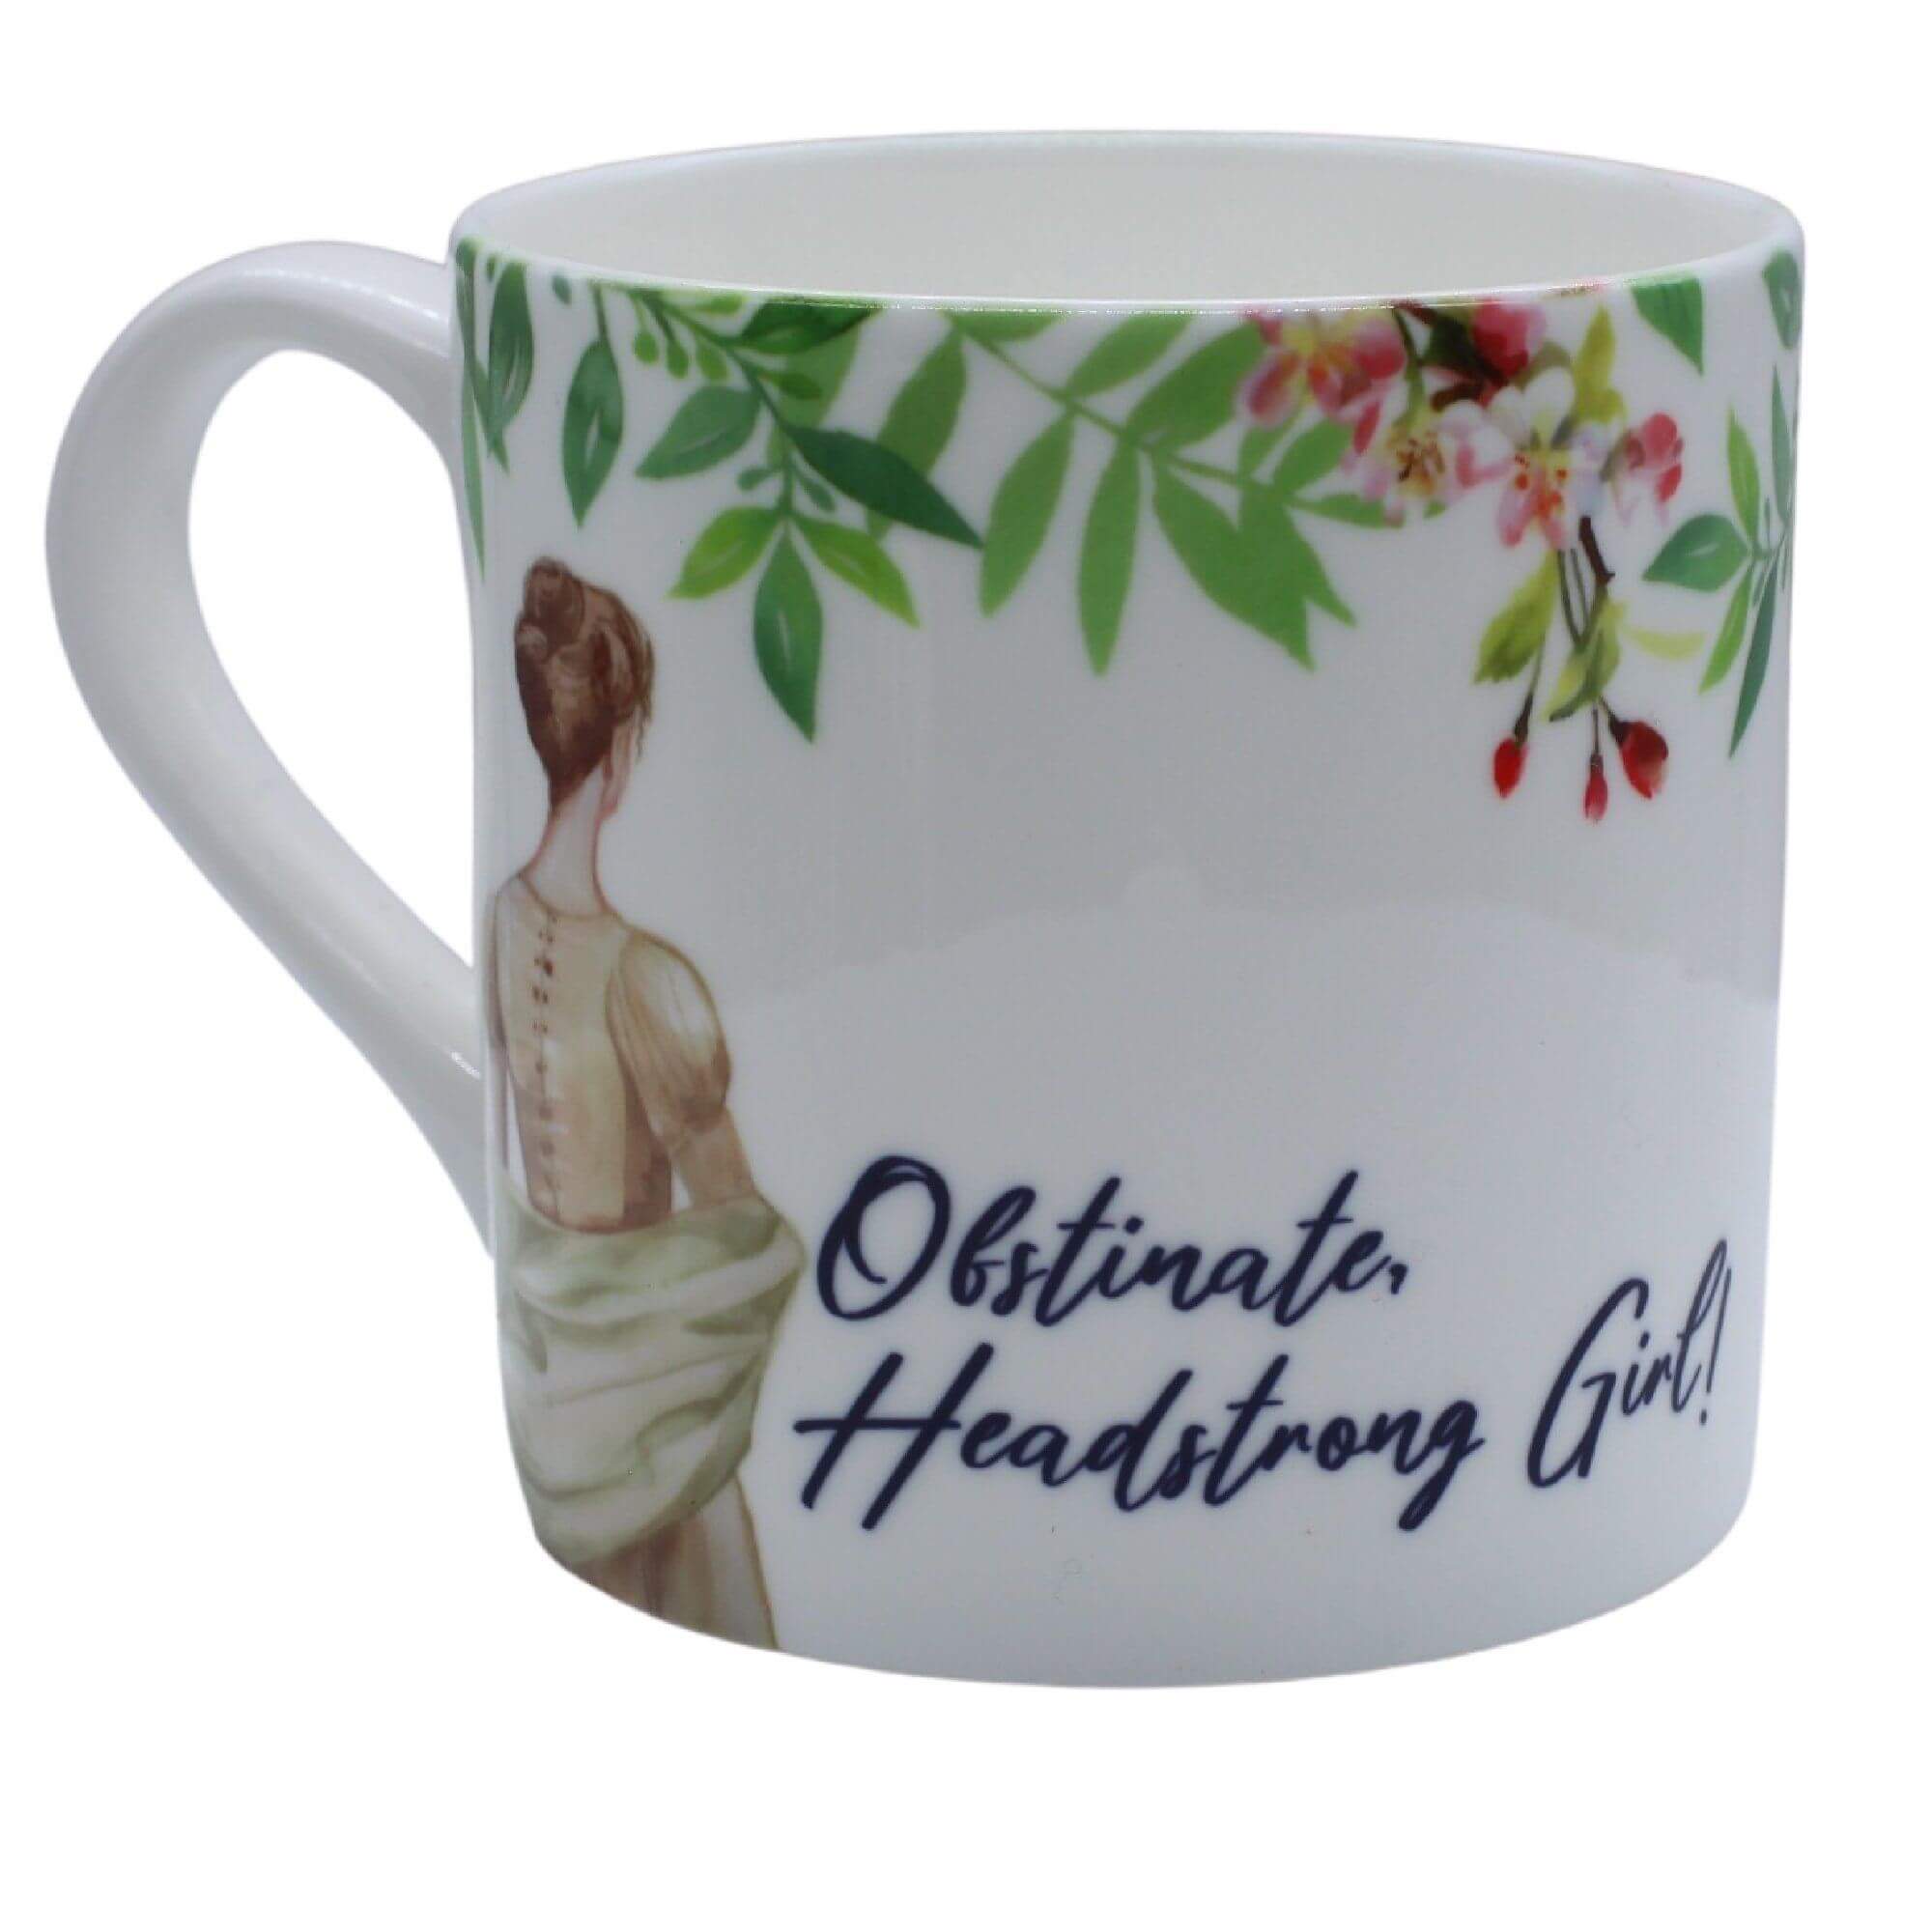 Obstinate, Headstrong Girl! (Jane Austen)  Mug Mugs Mustard and Gray Ltd Shropshire UK